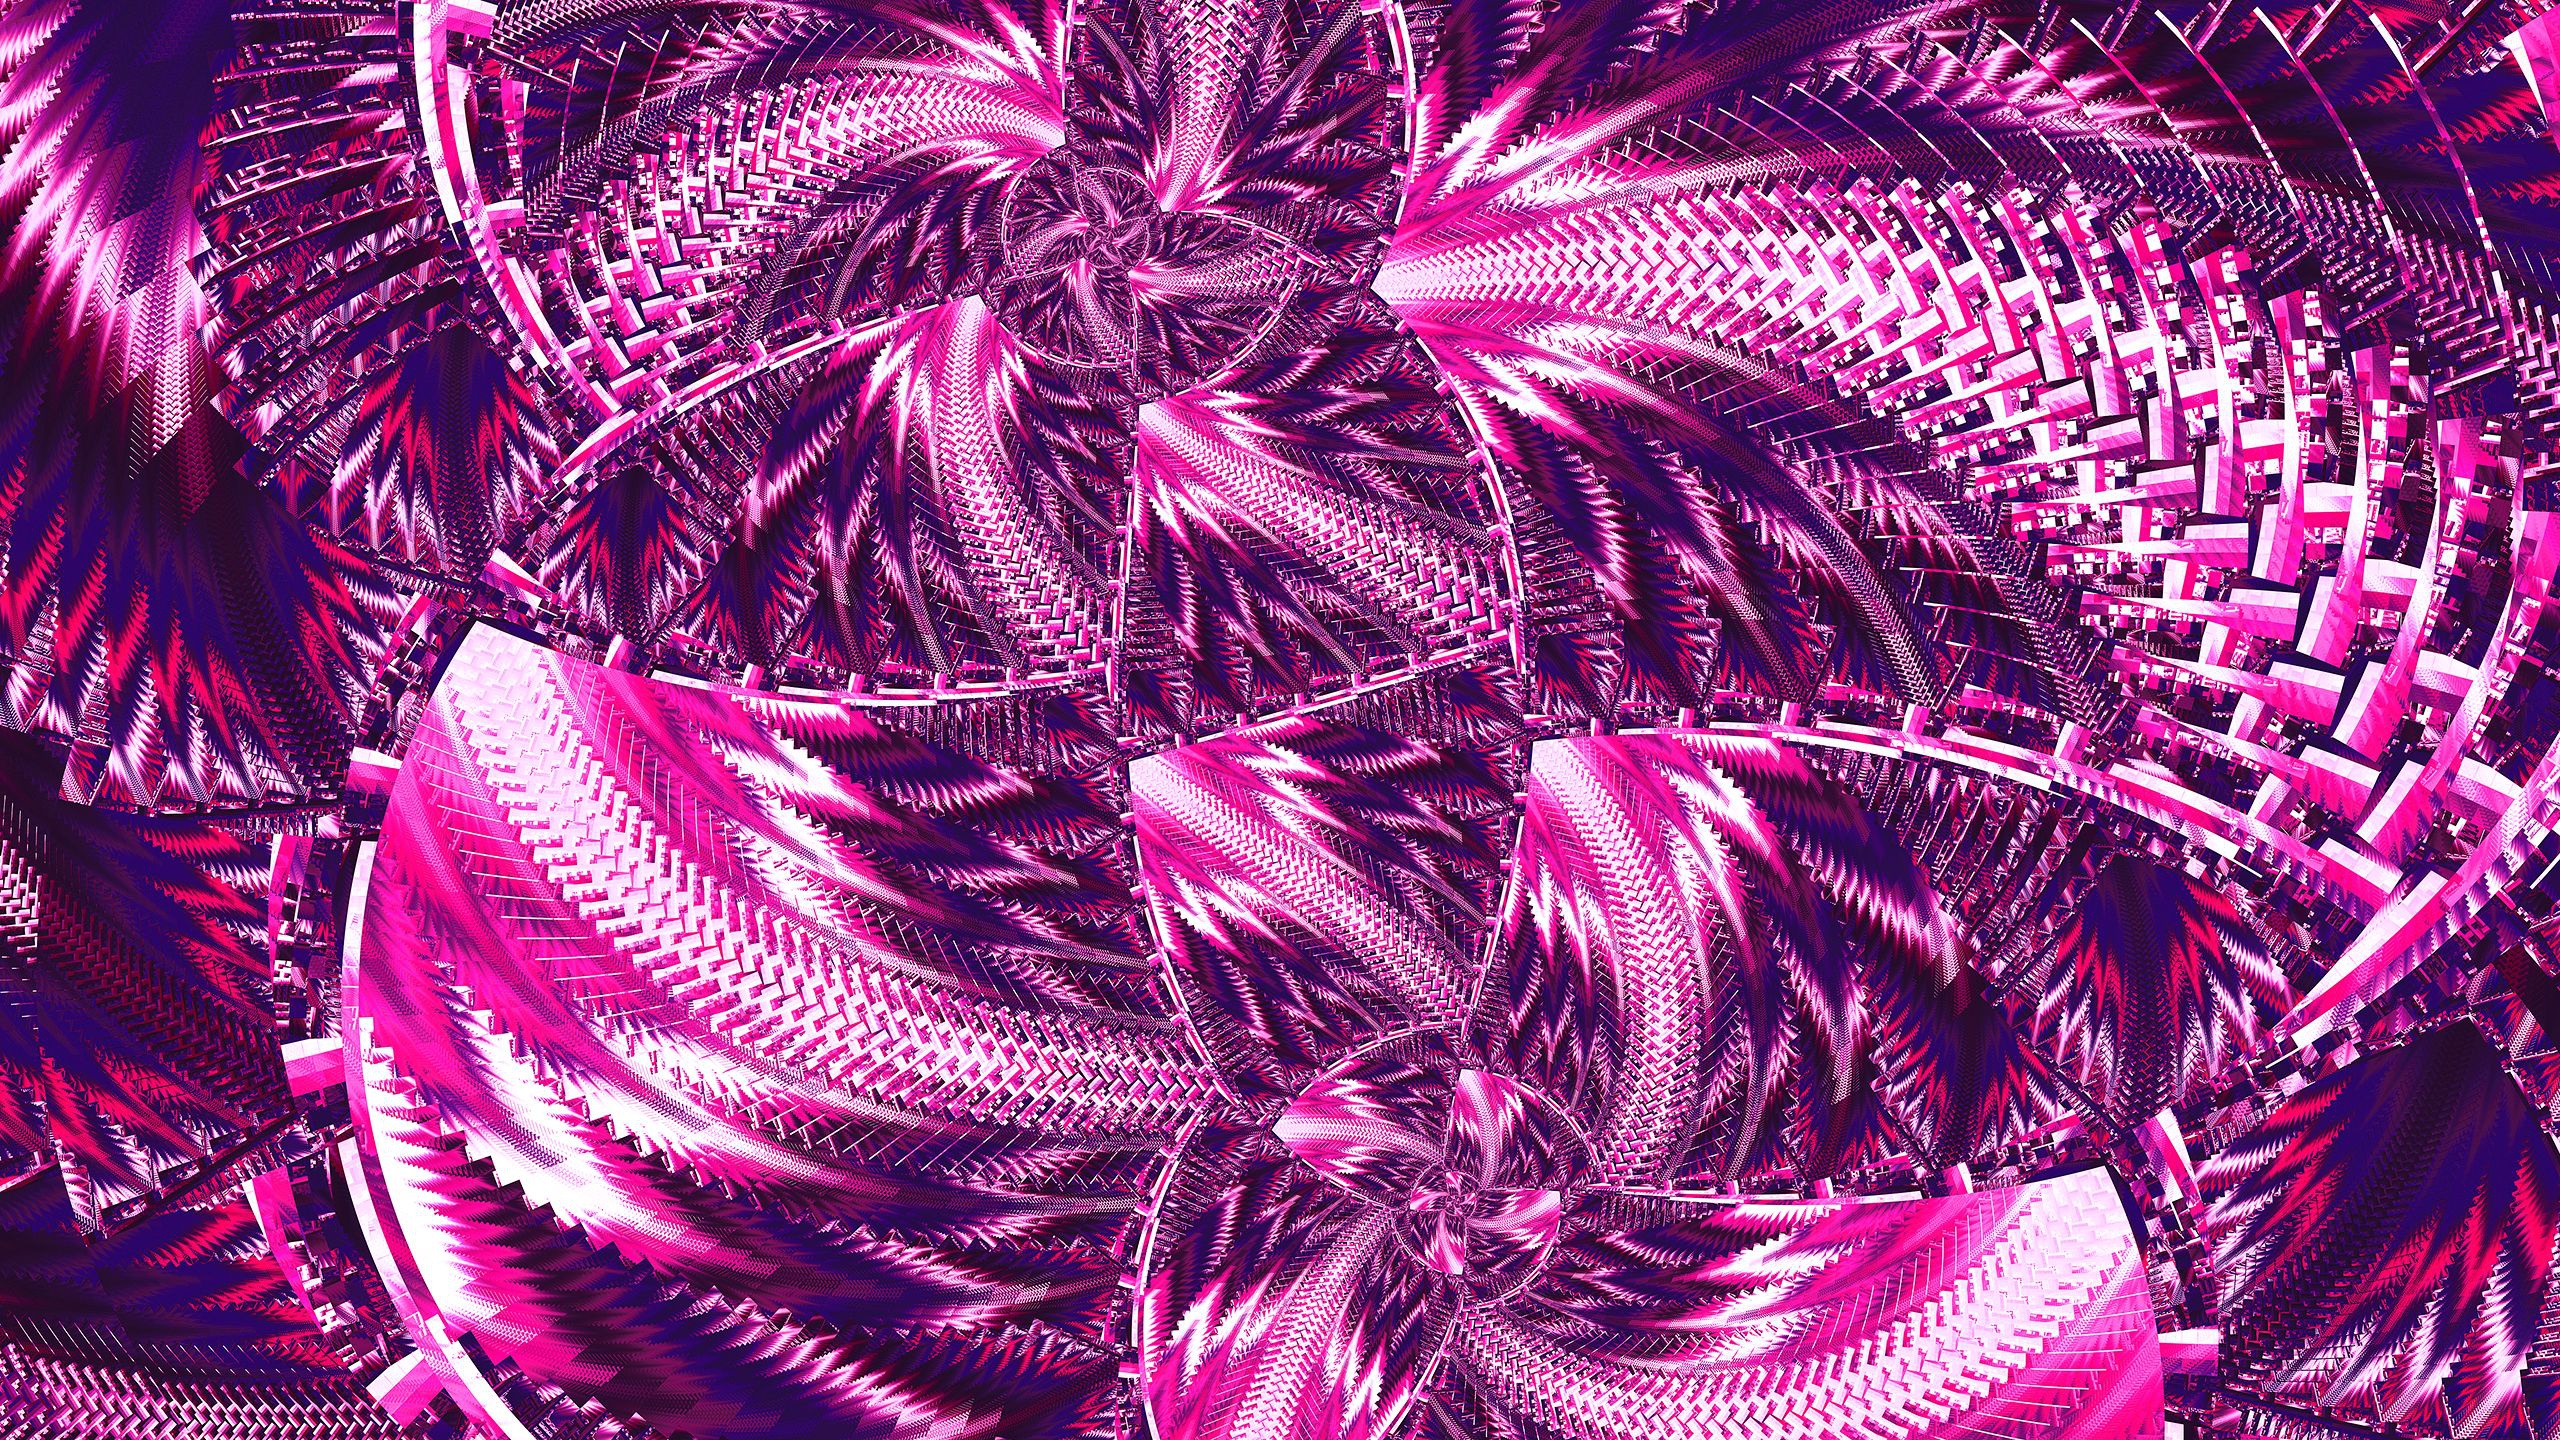 Artistic Digital Art Fractal Purple 2560x1440